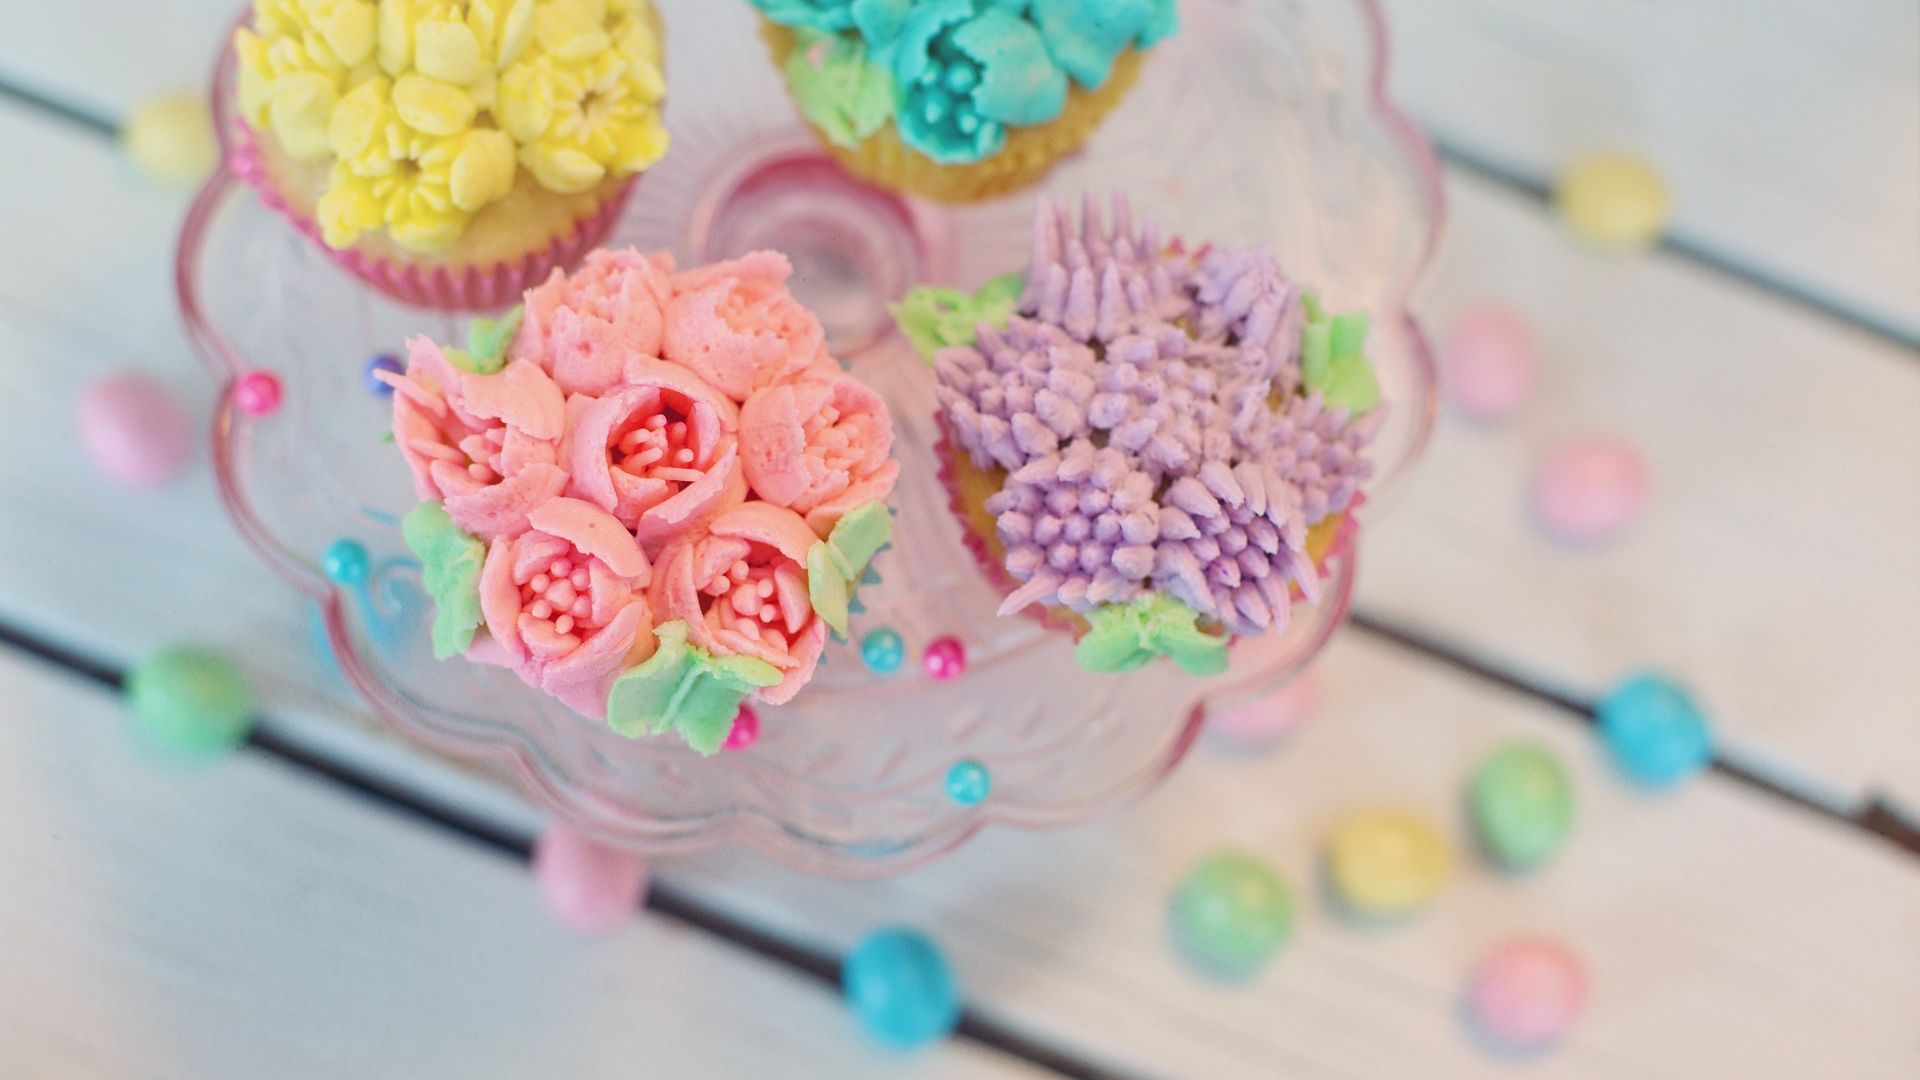 Wallpaper Cupcakes, pastries, colorful dessert